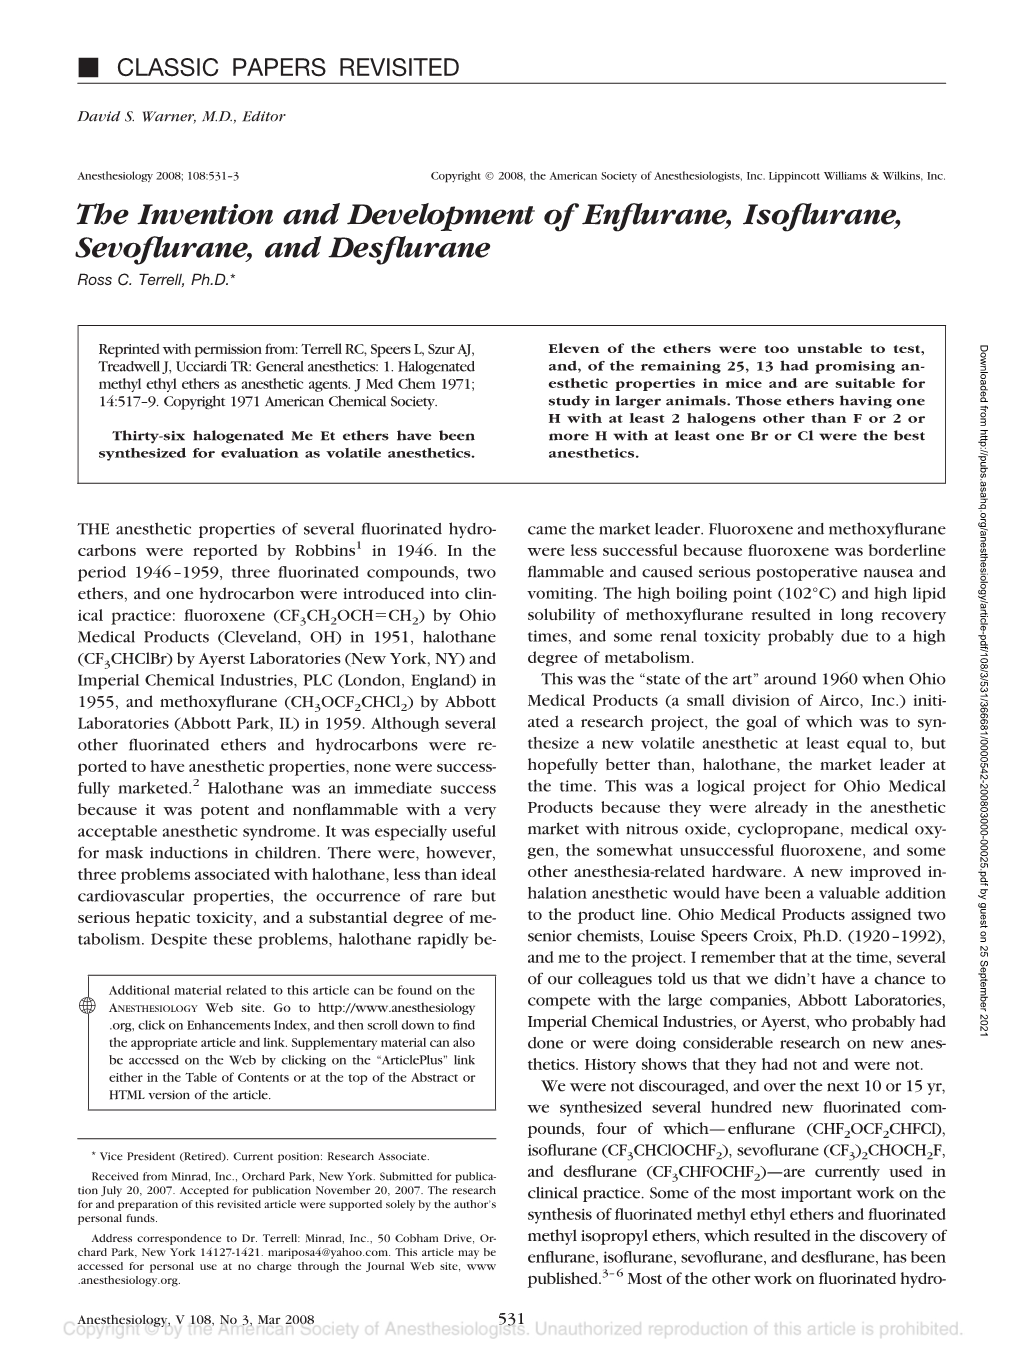 The Invention and Development of Enflurane, Isoflurane, Sevoflurane